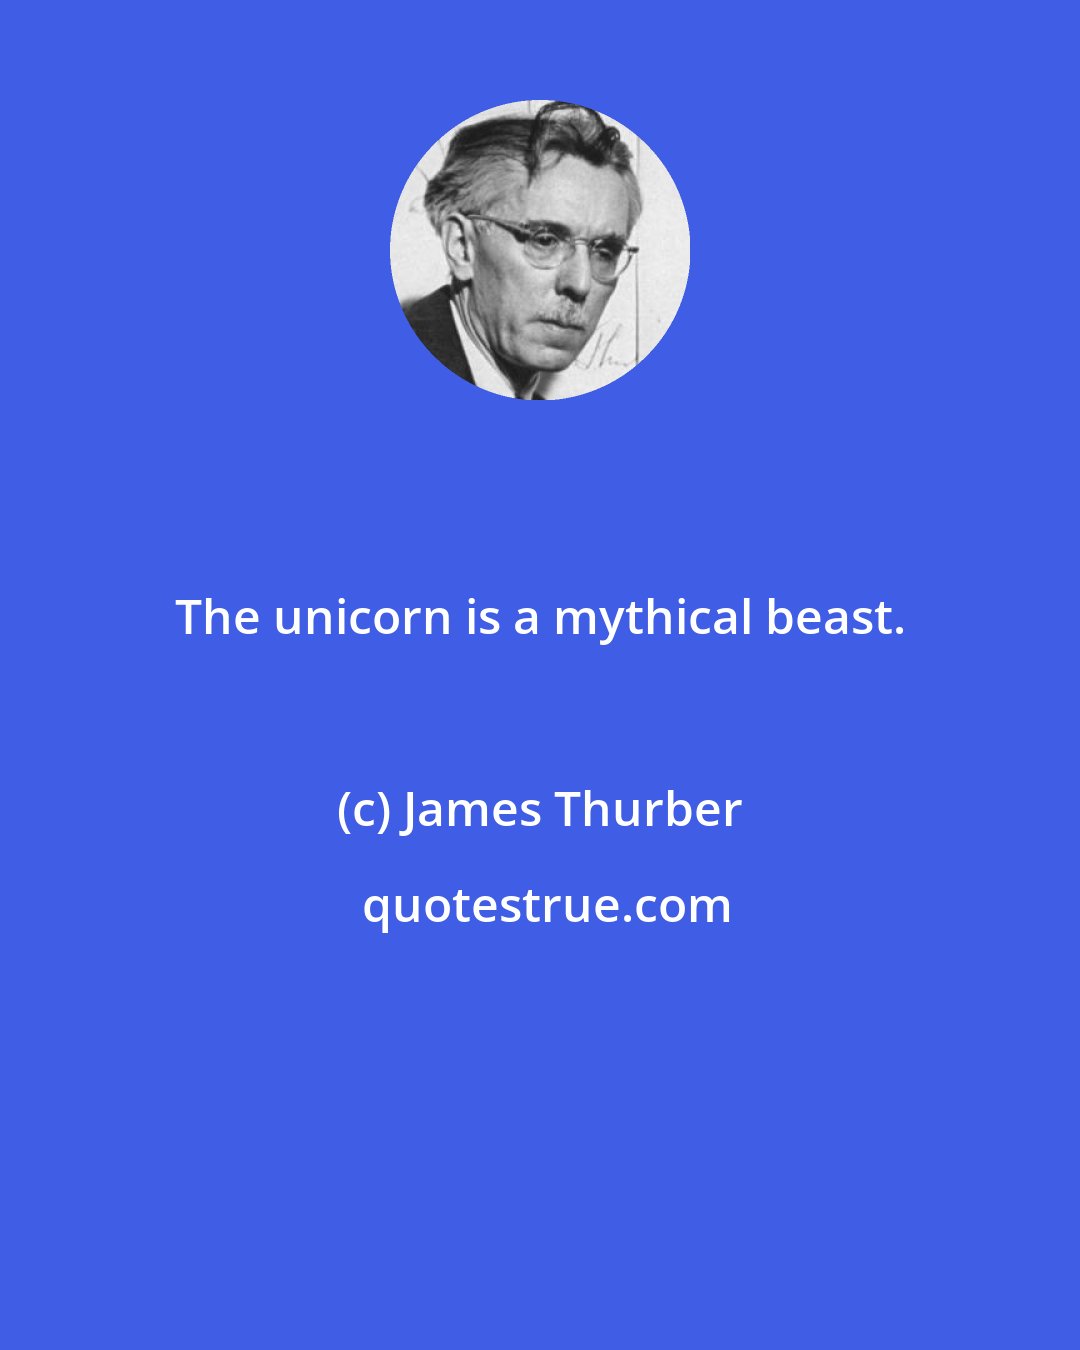 James Thurber: The unicorn is a mythical beast.